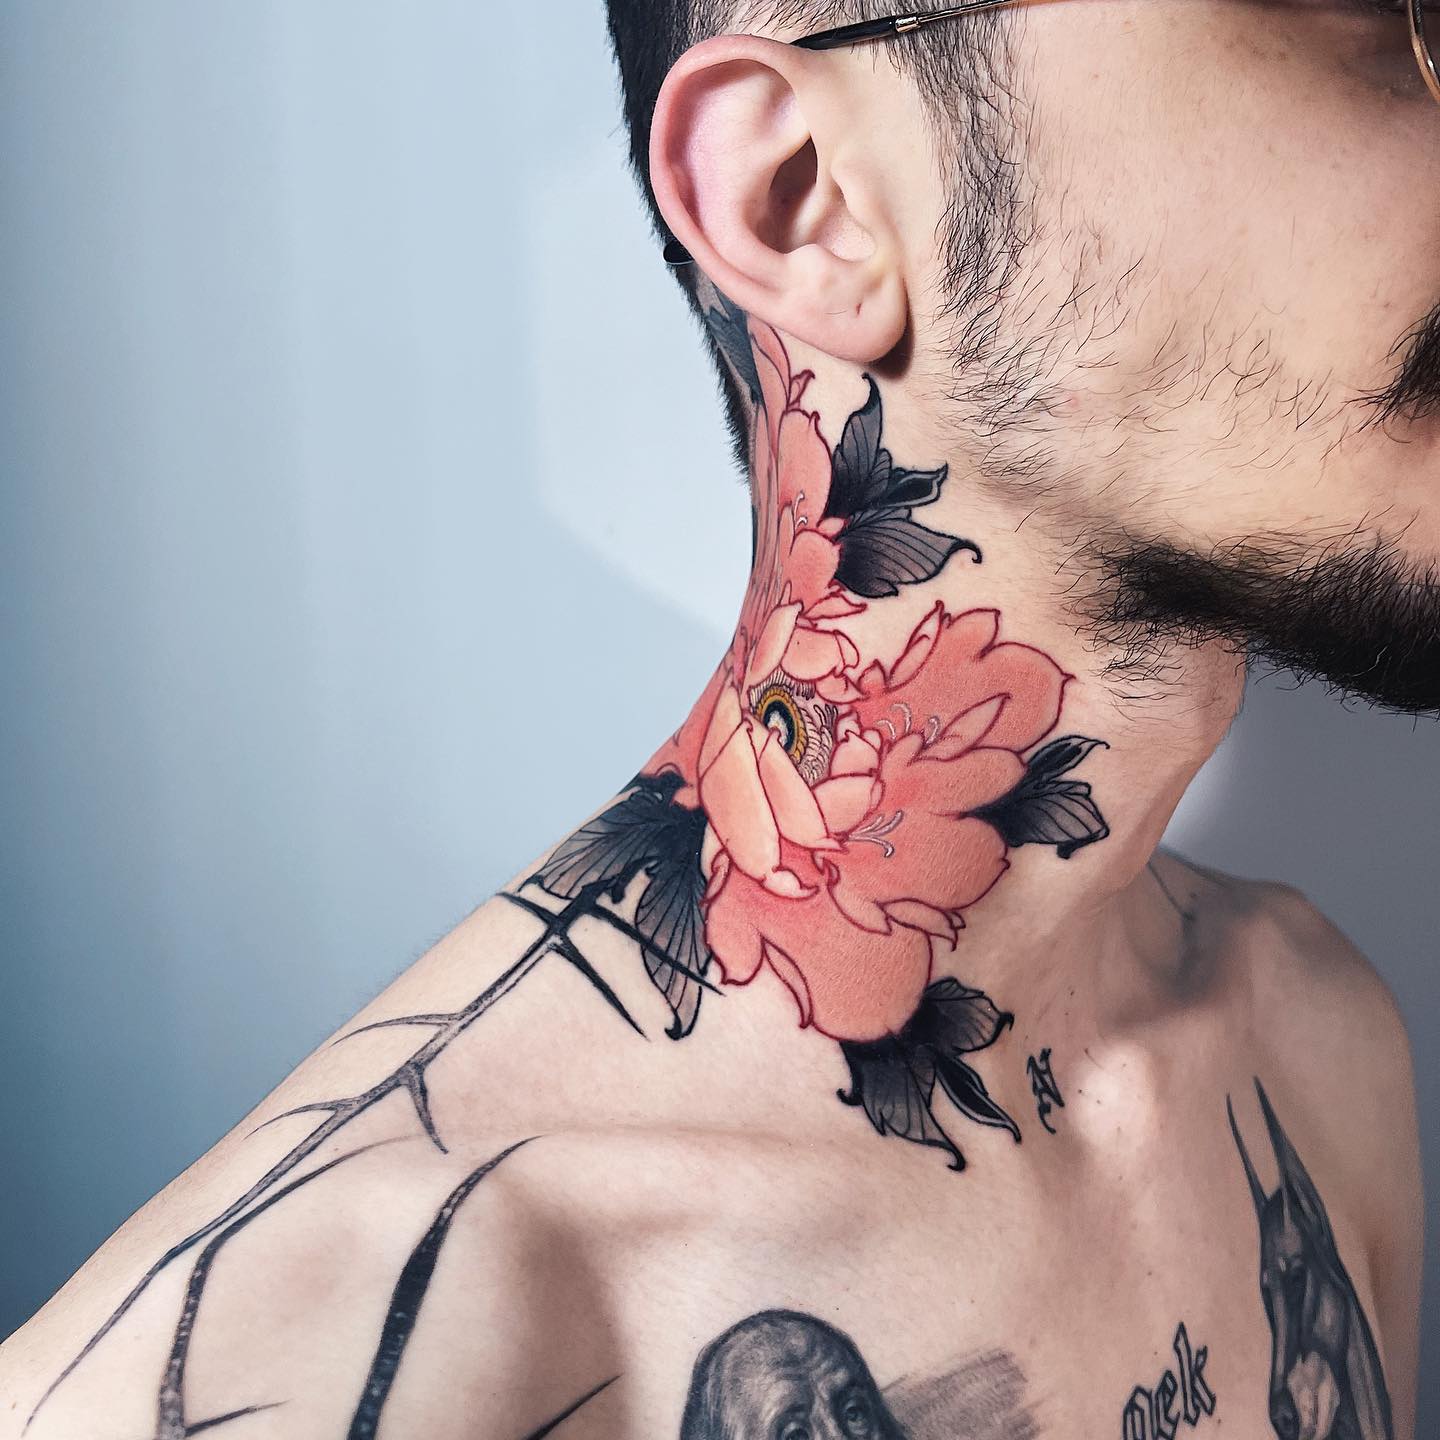 Tattoo uploaded by Tattoodo • Floral tattoo by Goyo #Goyo #floraltattoos # floral #flower #flowertattoos #plants #nature #petals #illustrative #peony # neck #leaves #rose #blackandgrey • Tattoodo